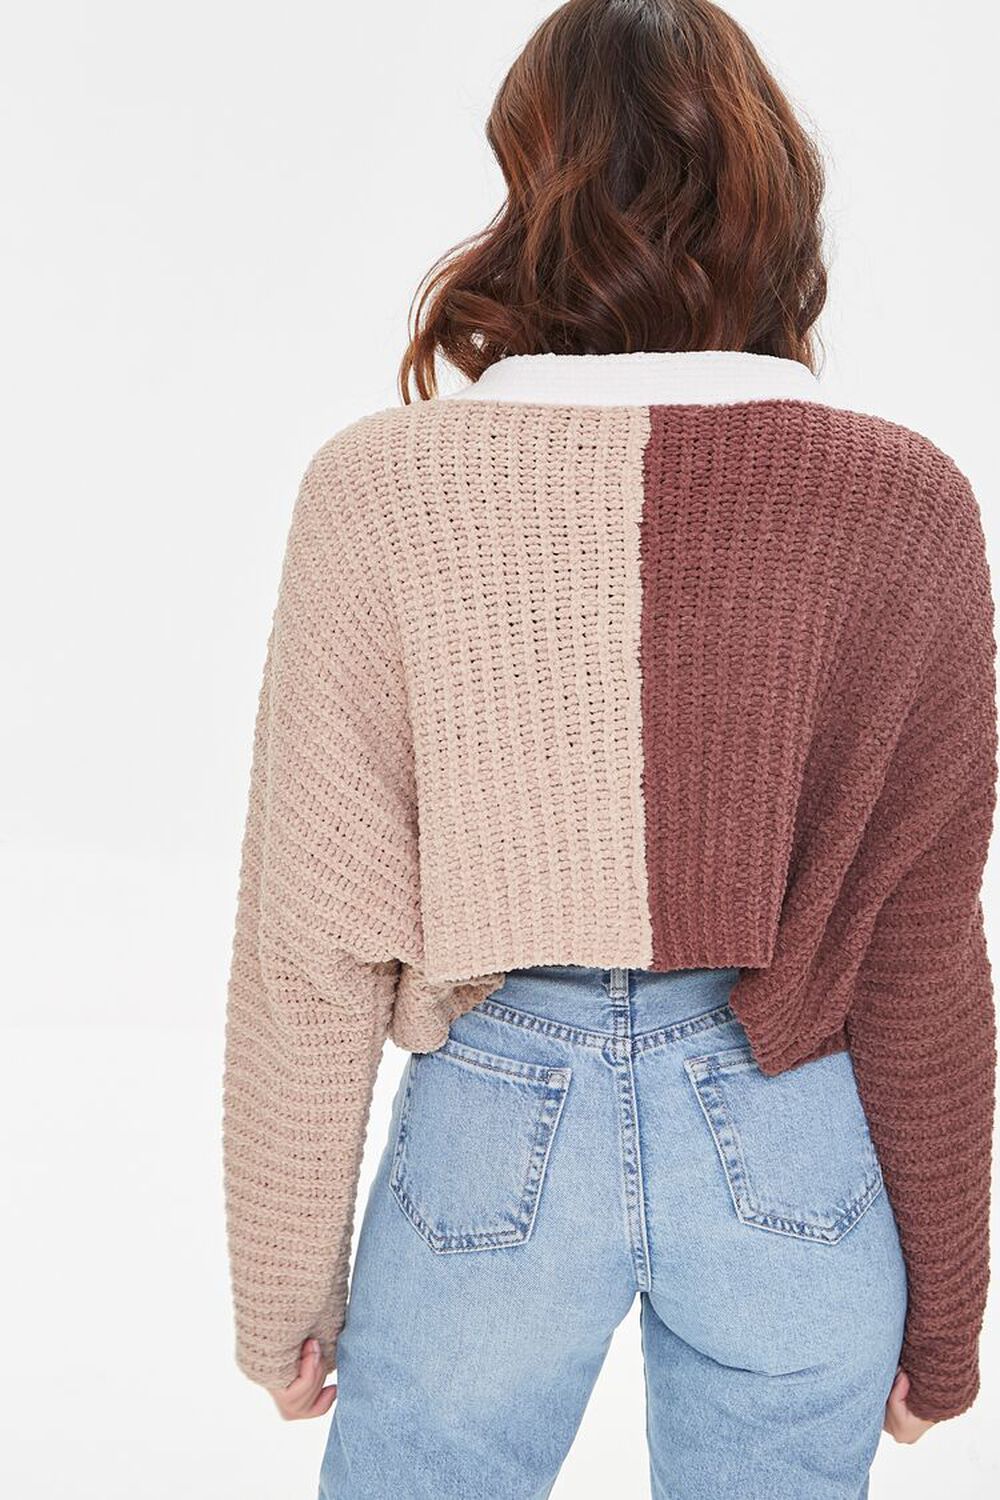 BROWN/TAUPE Colorblock Cardigan Sweater, image 3